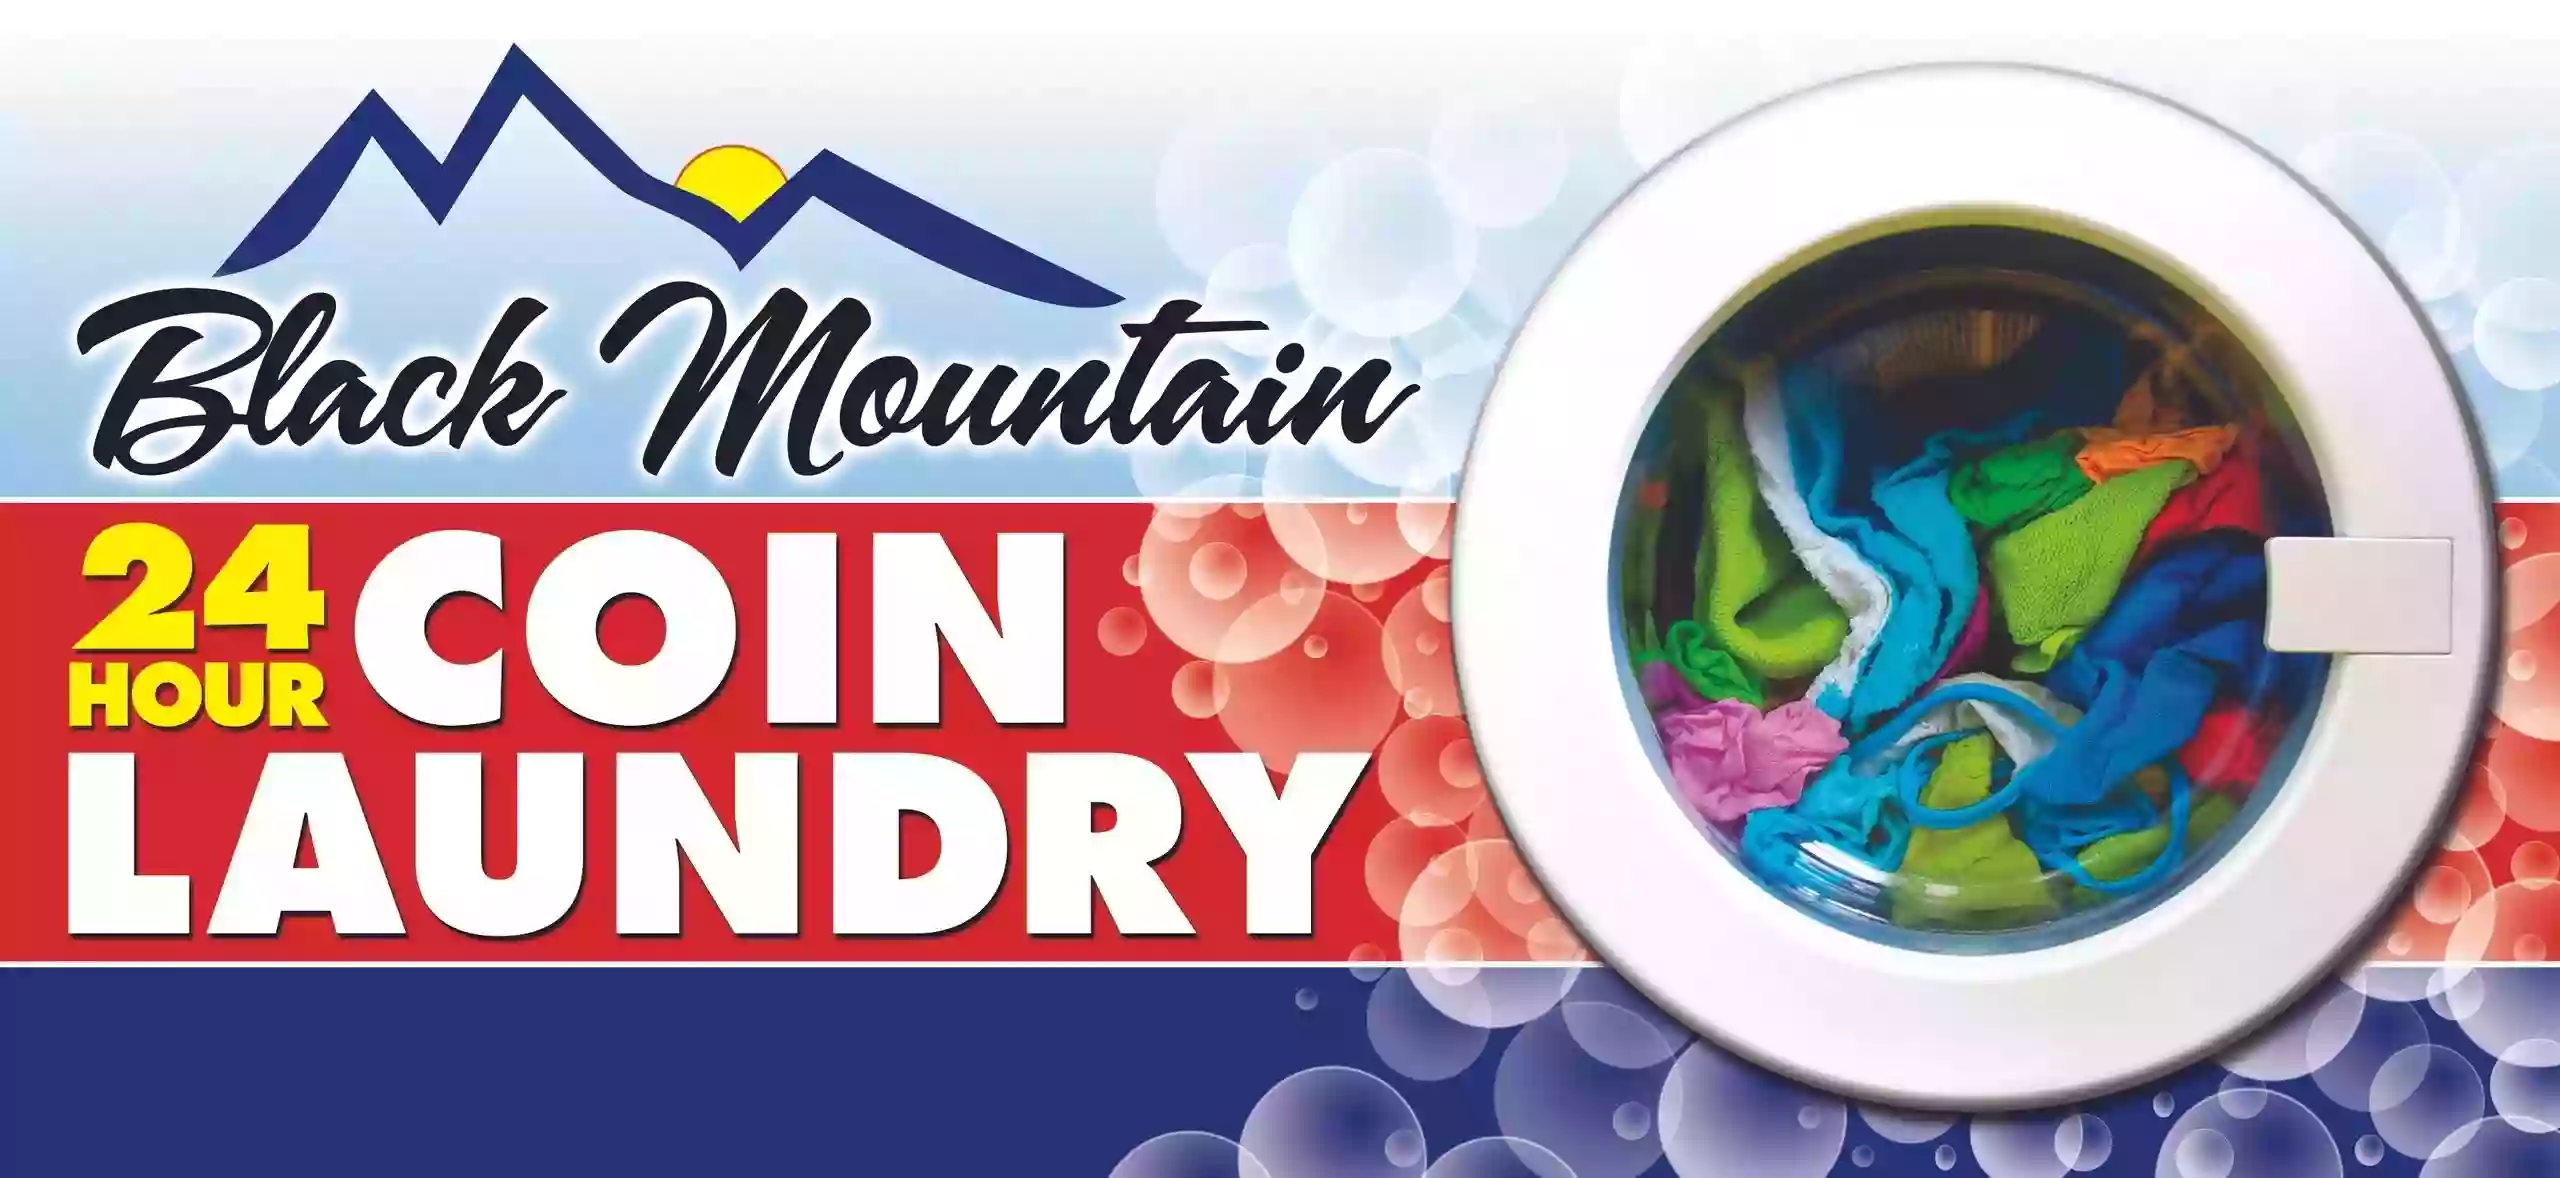 Black Mountain Coin Laundry